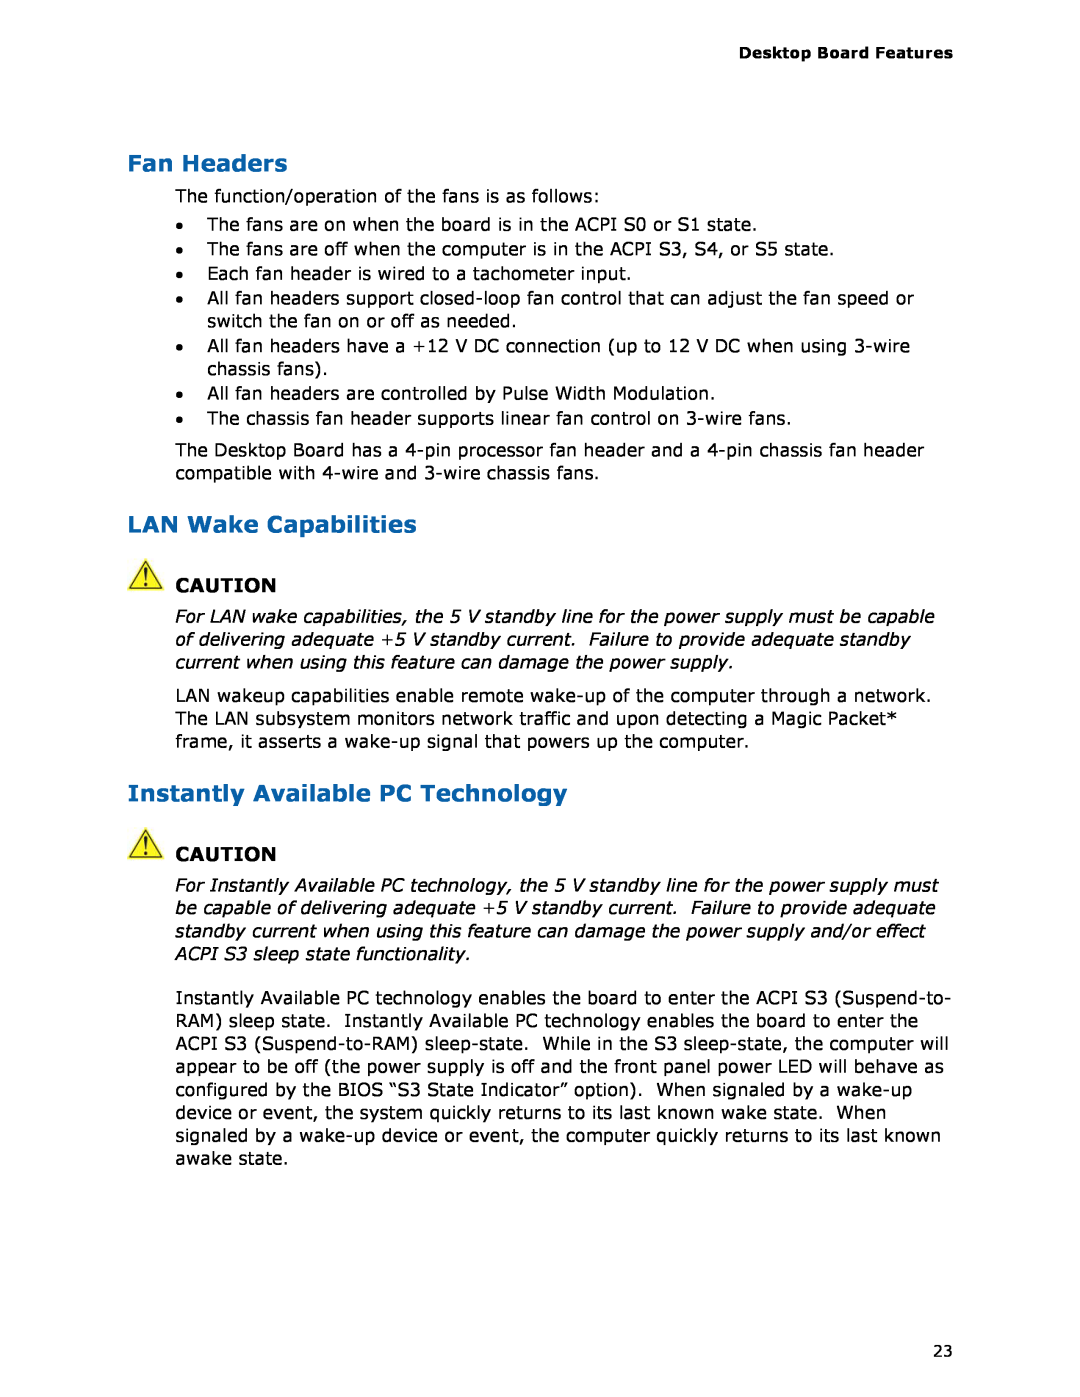 Intel BLKDH57JG manual Fan Headers, LAN Wake Capabilities, Instantly Available PC Technology 